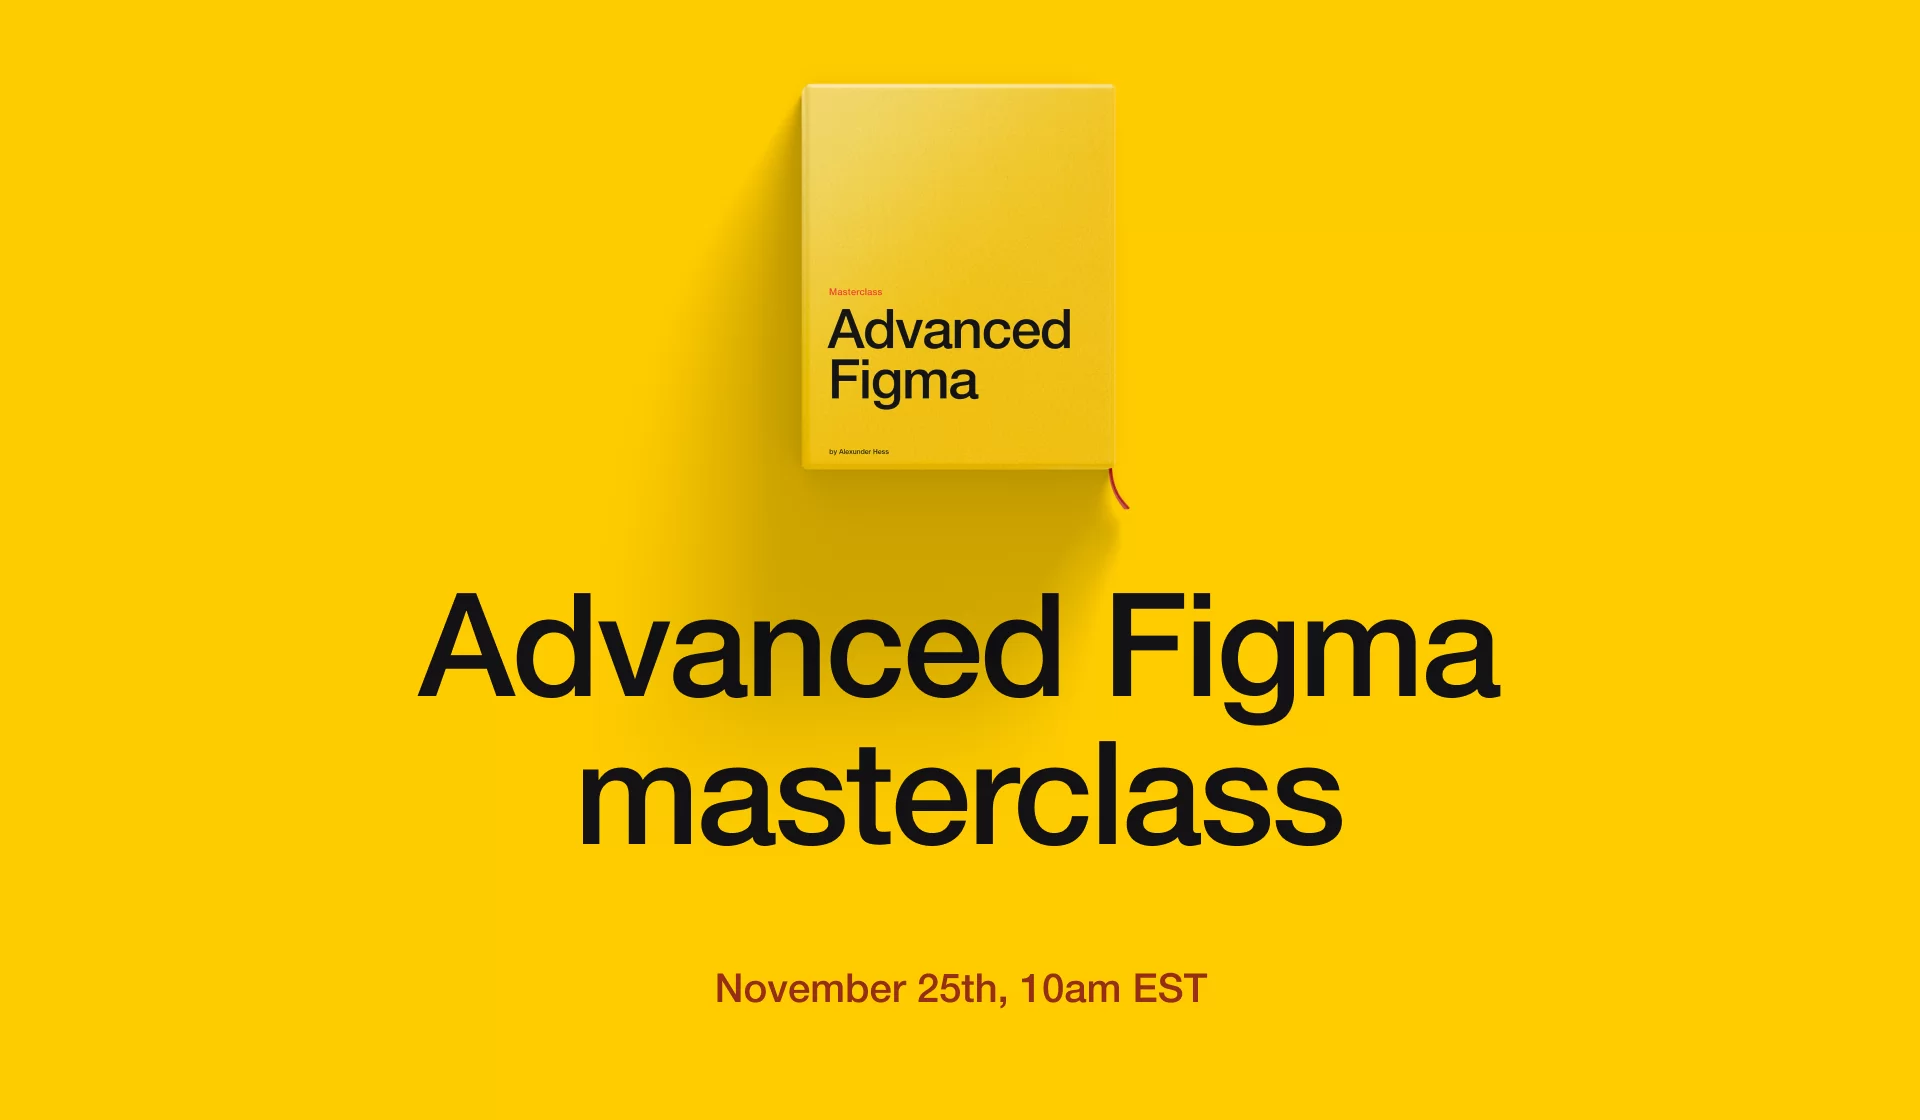 Advanced Figma Masterclass - Alexunder Hess